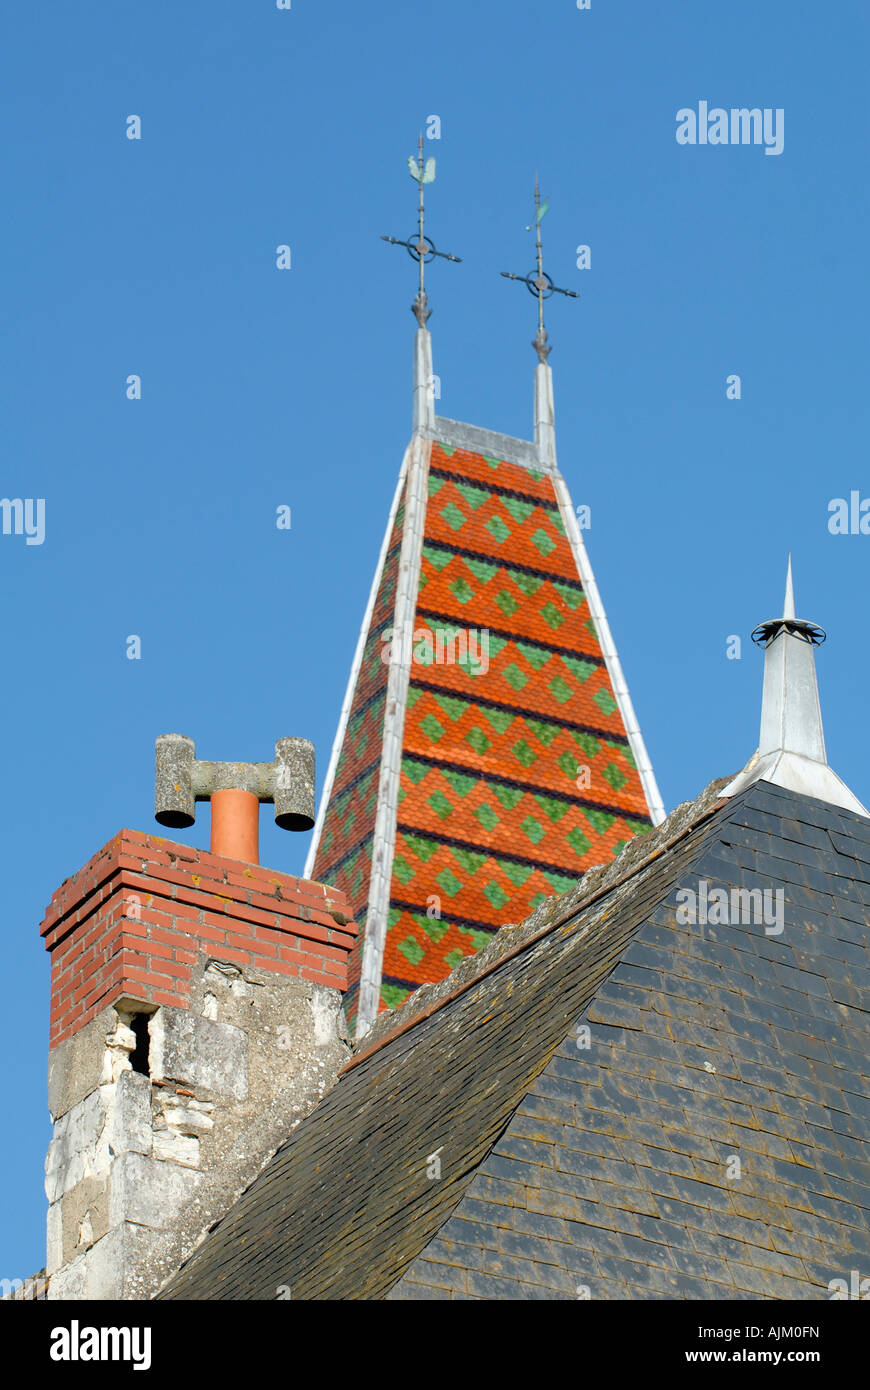 Chimney stack, Preuilly-sur-Claise, Indre-et-Loire, France. Stock Photo